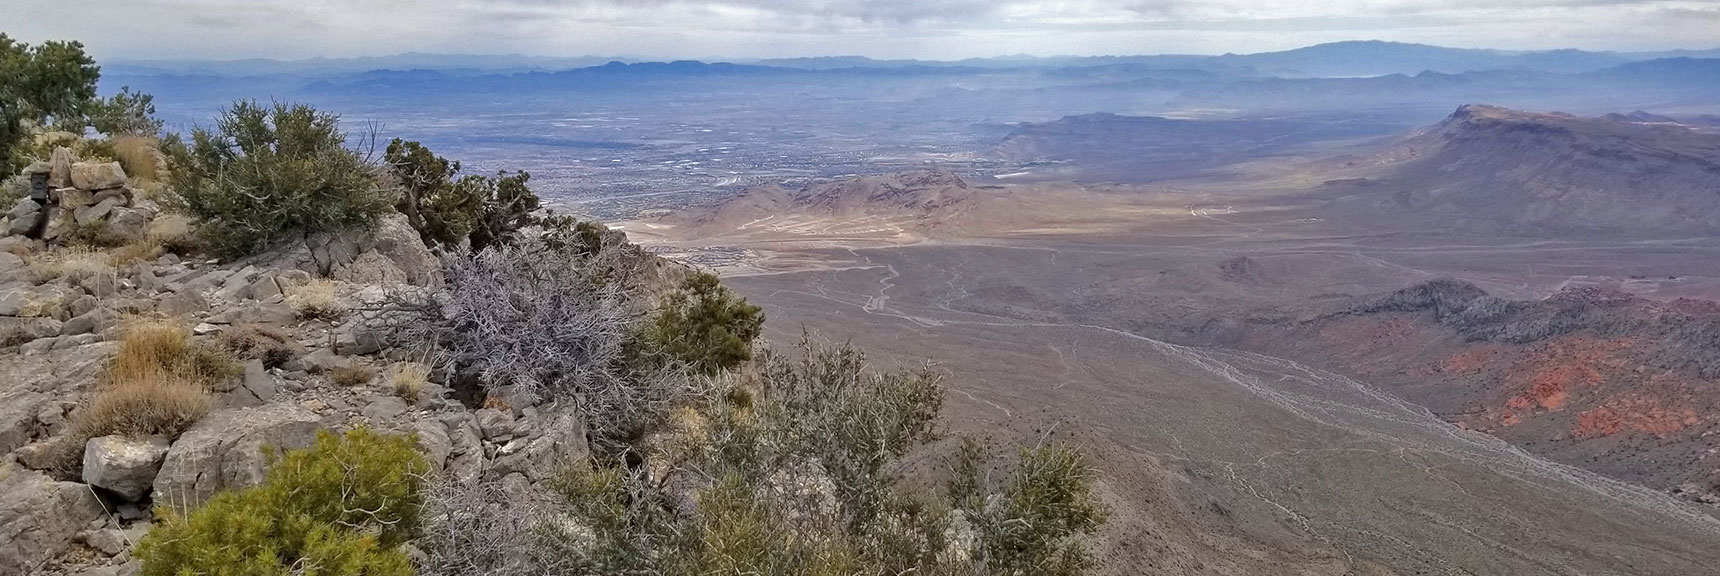 Damsel Peak Summit in Calico Basin, Nevada 009